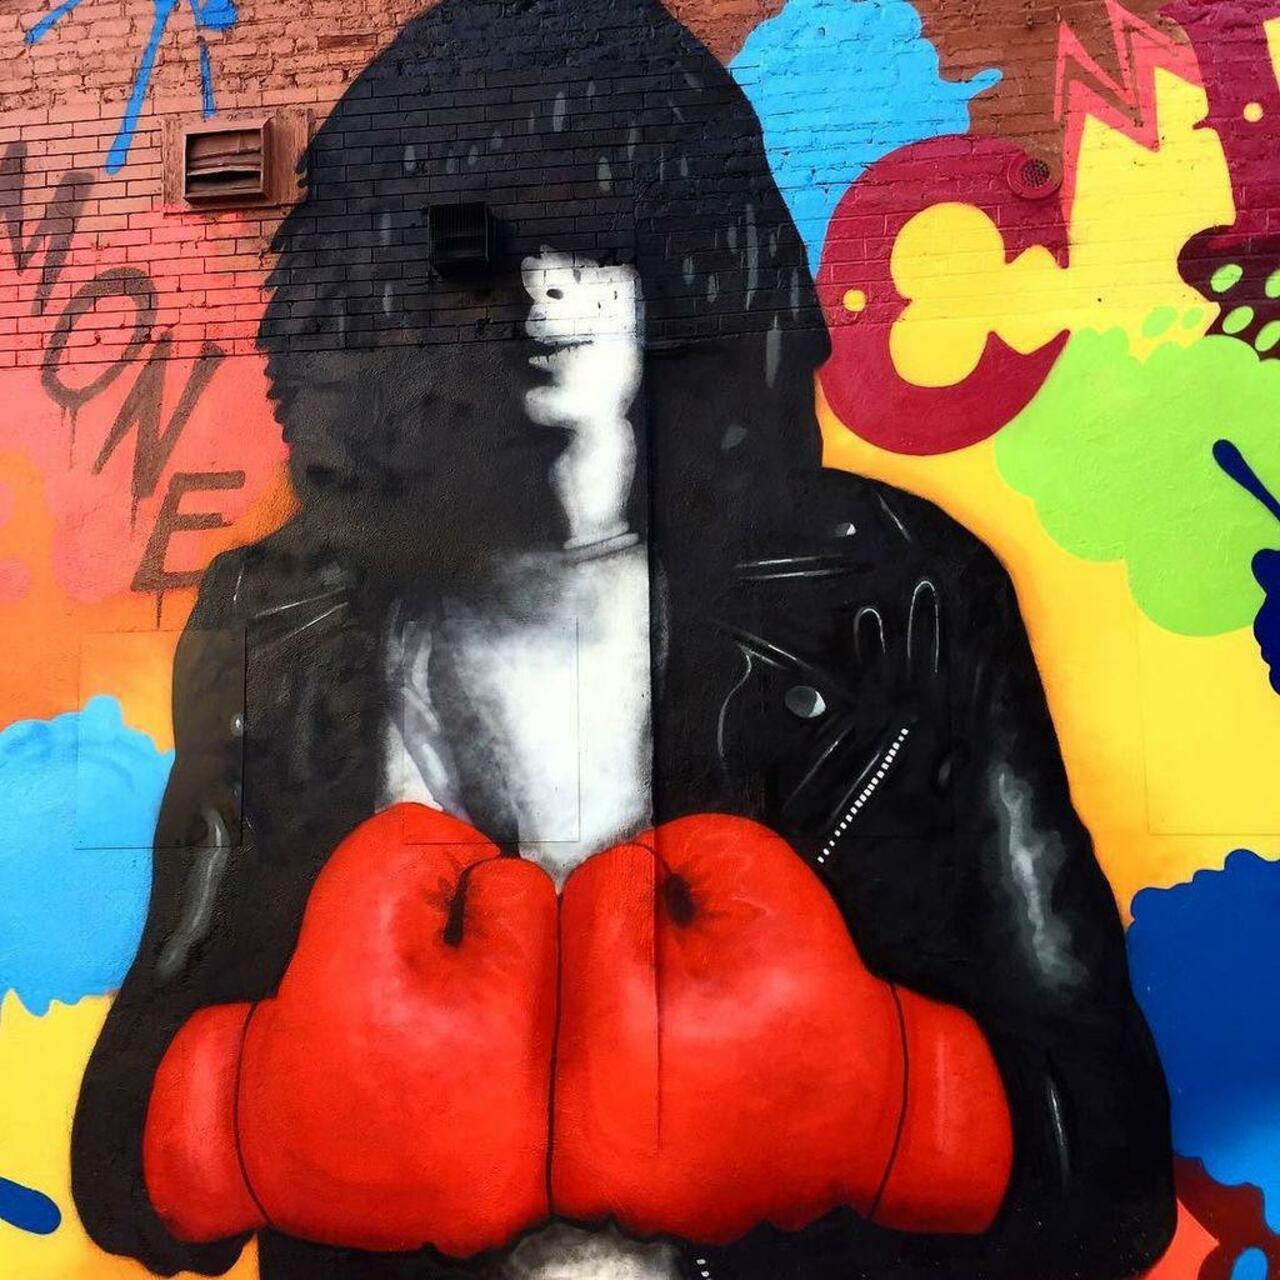 ##streetart #streetartnyc #urbanart #graf #graffiti #instagraf #joeyramone #cbgbs #boxing #mural #muralism #newyork… http://t.co/Ihxg4CTl9c